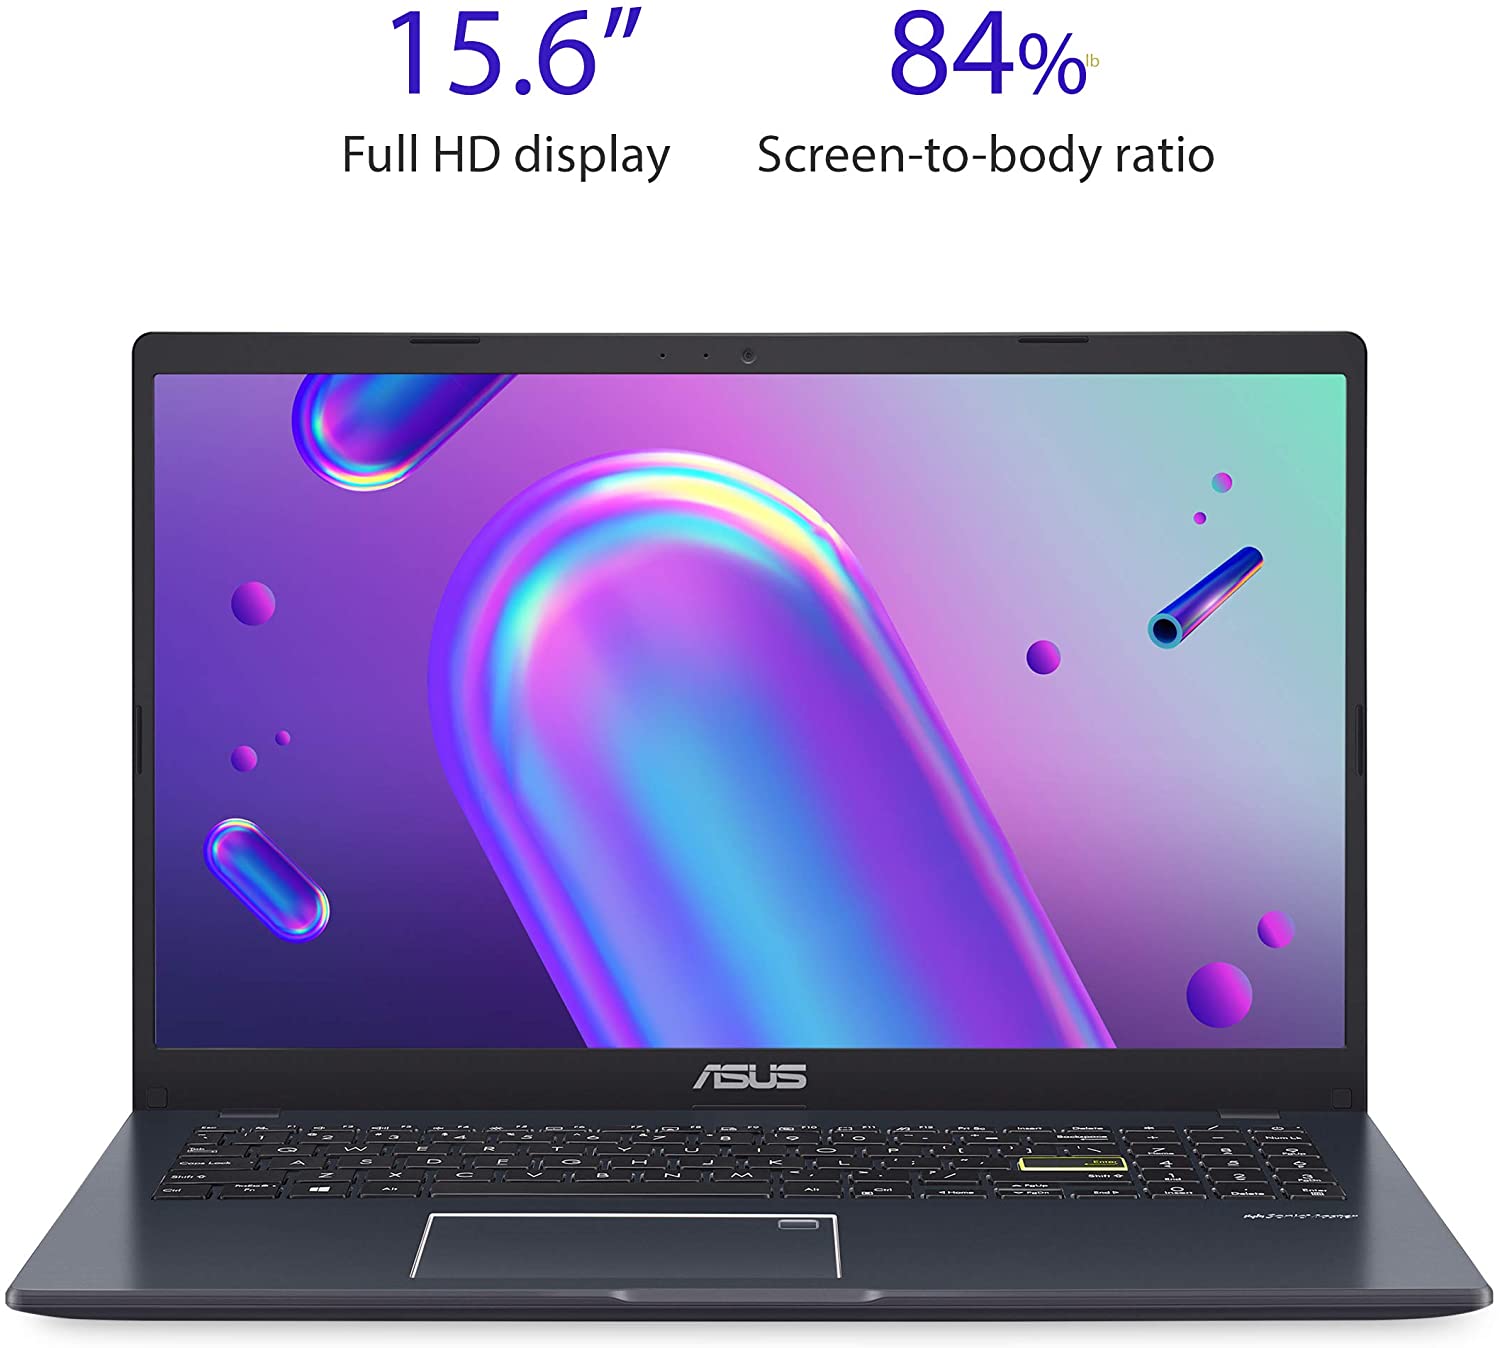 ASUS Laptop L510 Ultra Thin Laptop, 15.6” FHD Display, Intel Celeron N4020 Processor, 4GB RAM, 128GB Storage